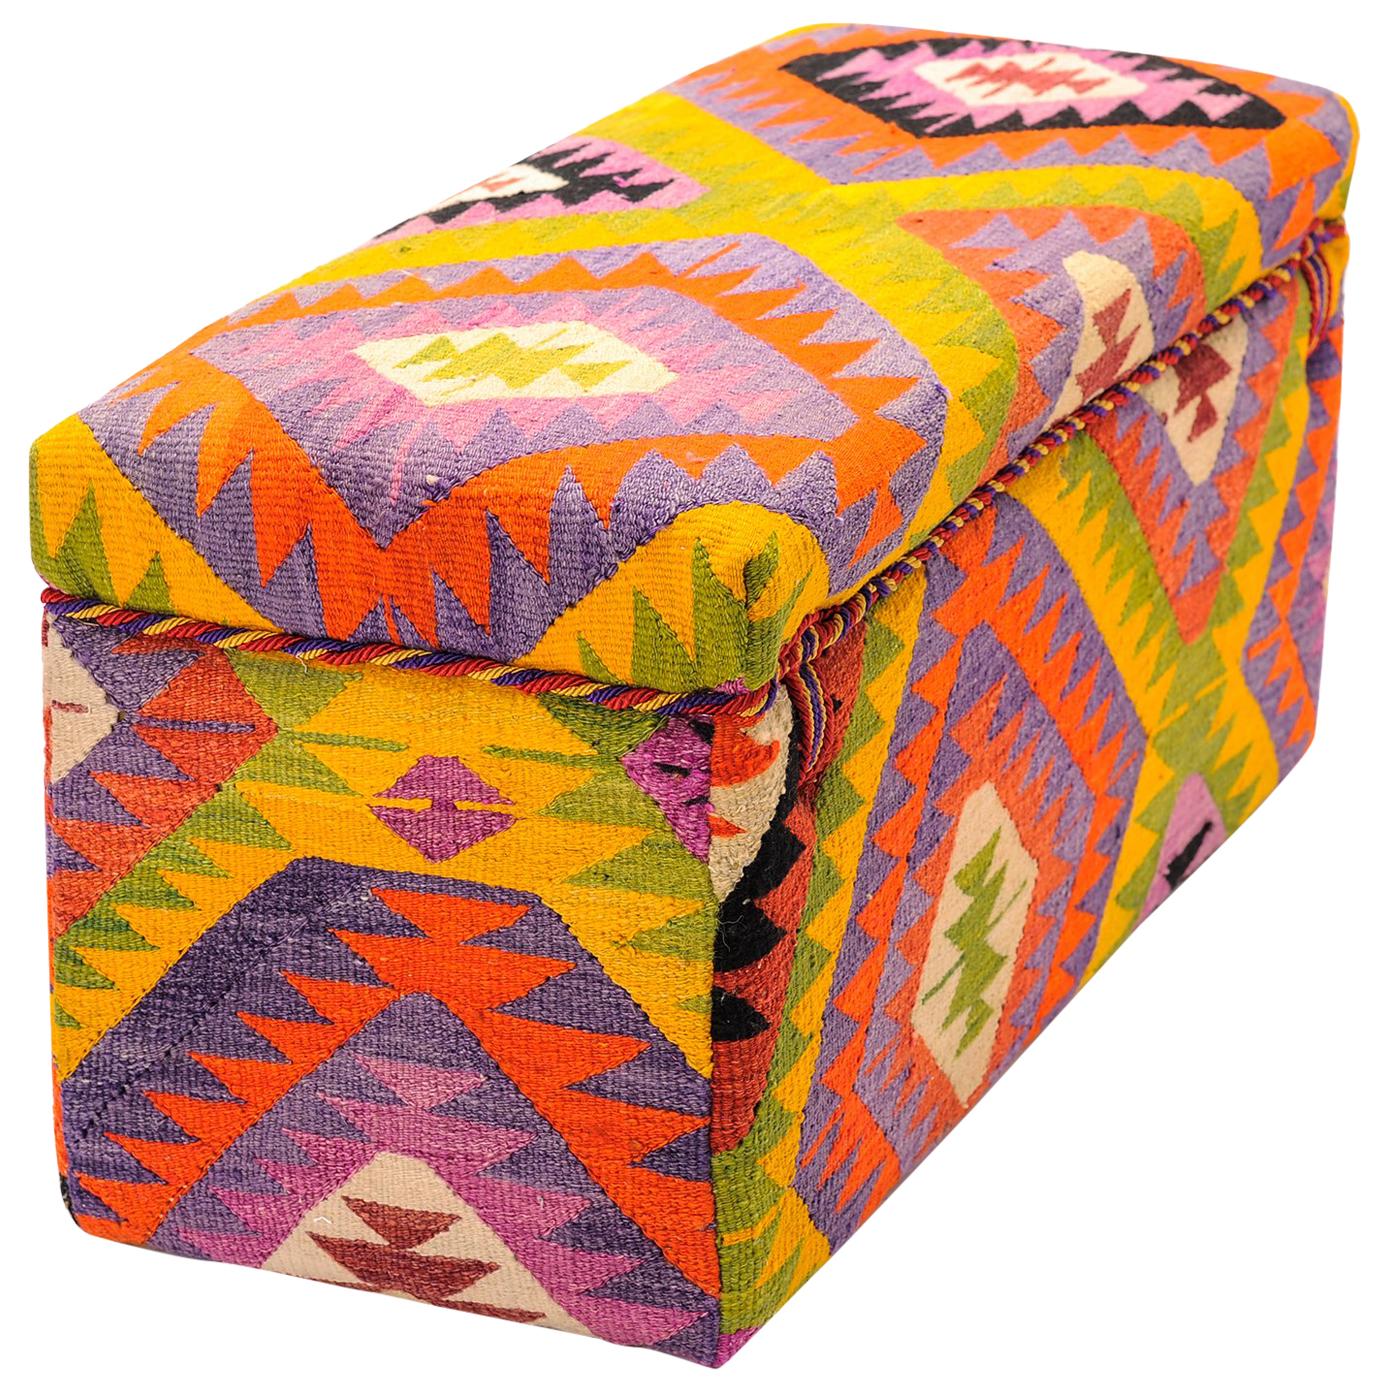 Kilim Upholstered Bench or Pouf with Modern Taste For Sale